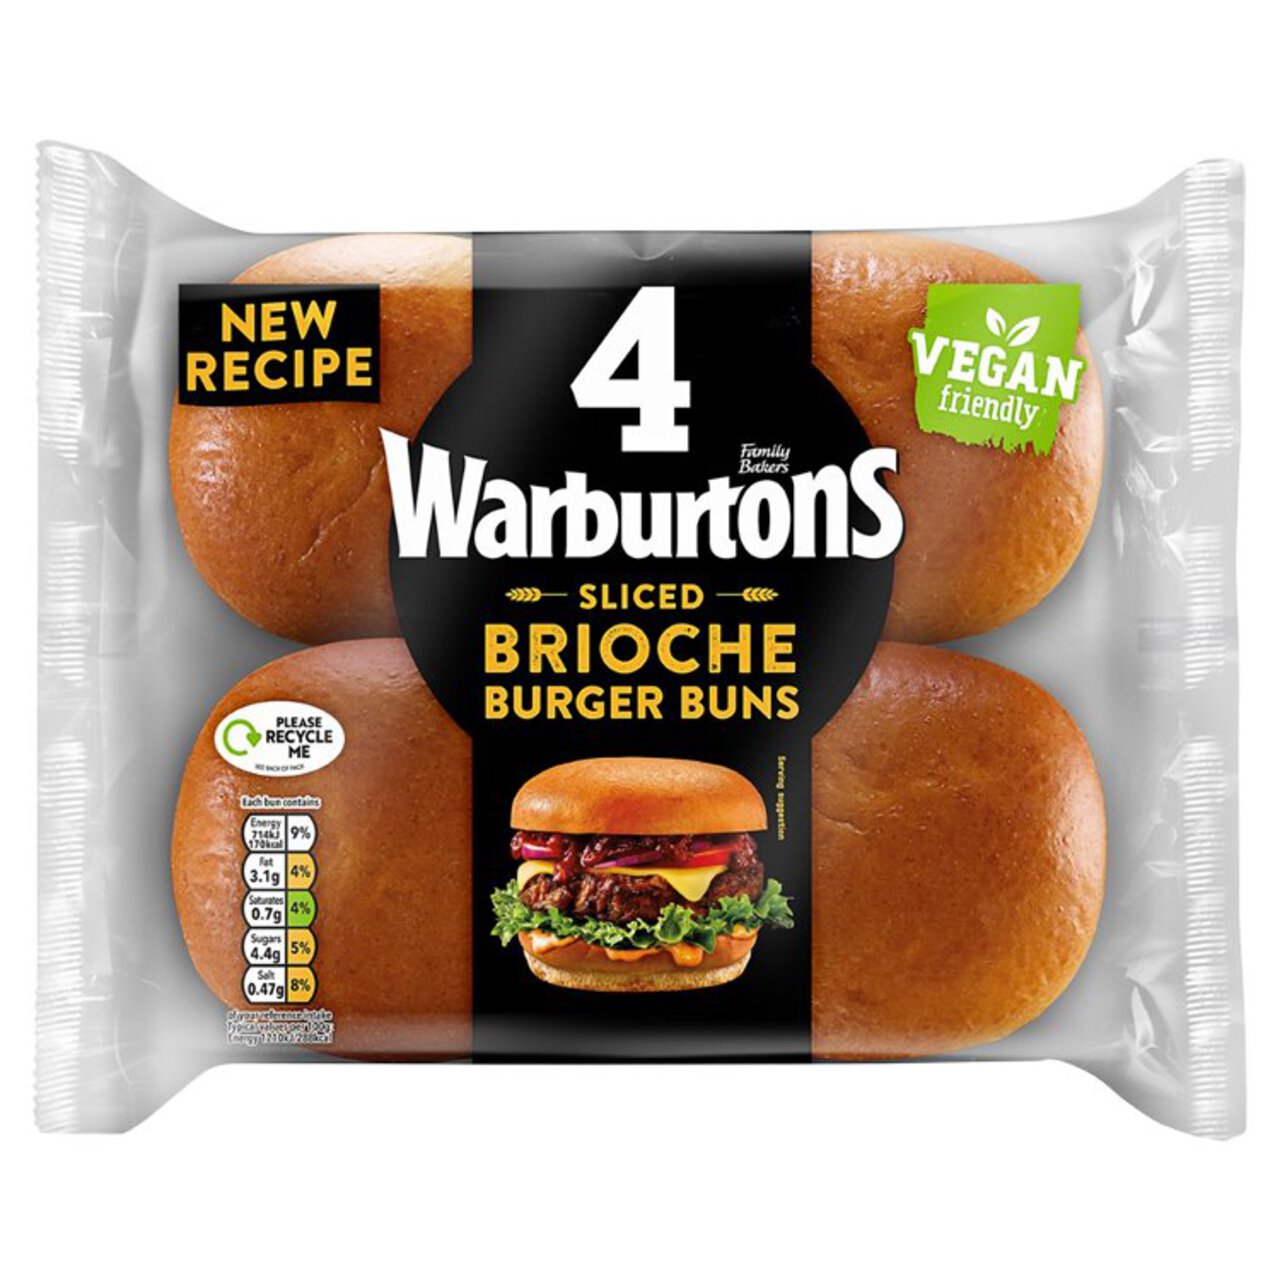 Warburtons Brioche Burger Buns 4 per pack